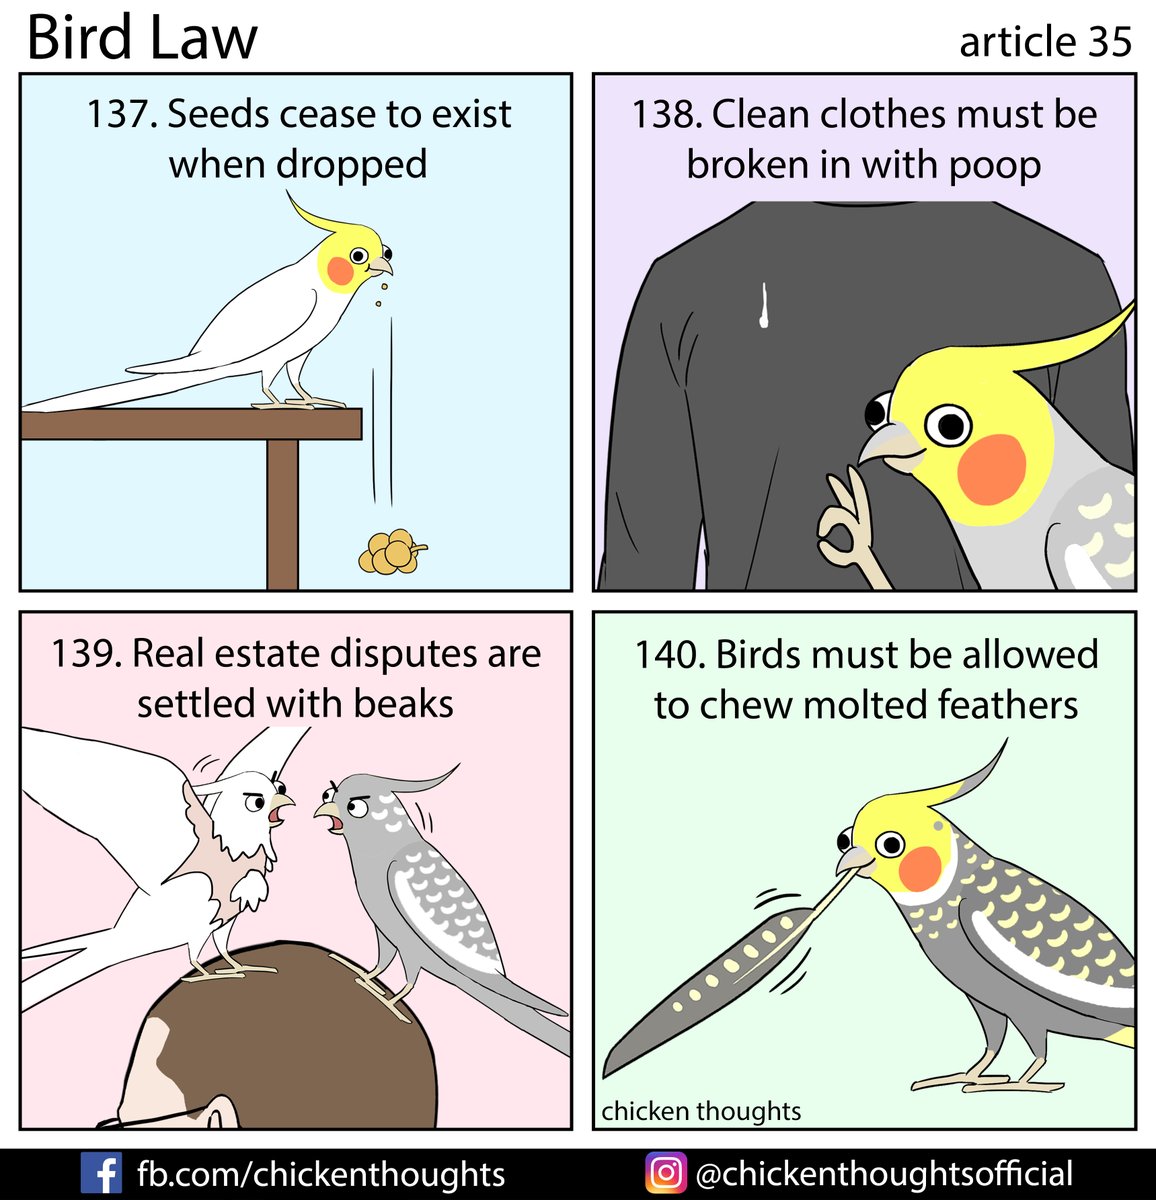 Bird law article 35 starring Yamfish, Kiwi (@avianfruitsalad), Carter & Collin, and Dante!